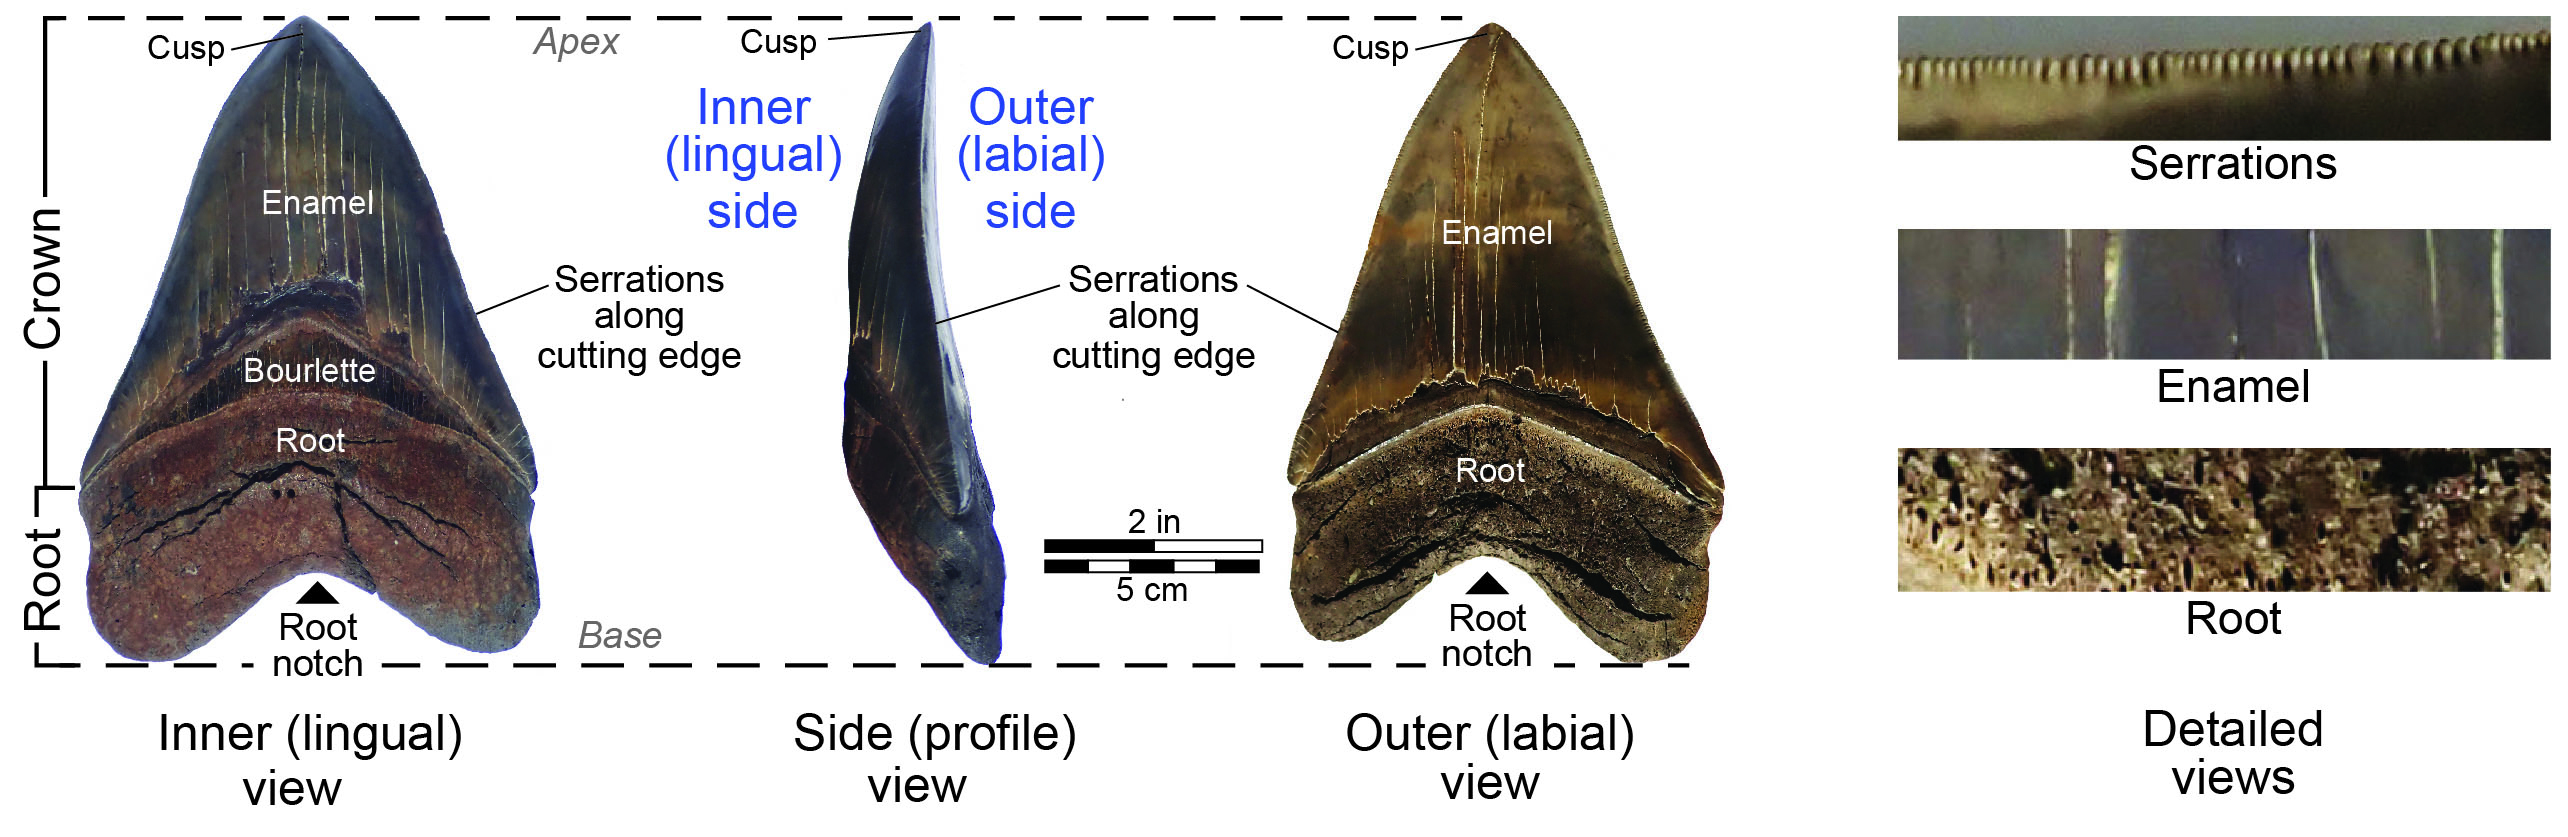 South Carolina Fossil Great White Shark Teeth